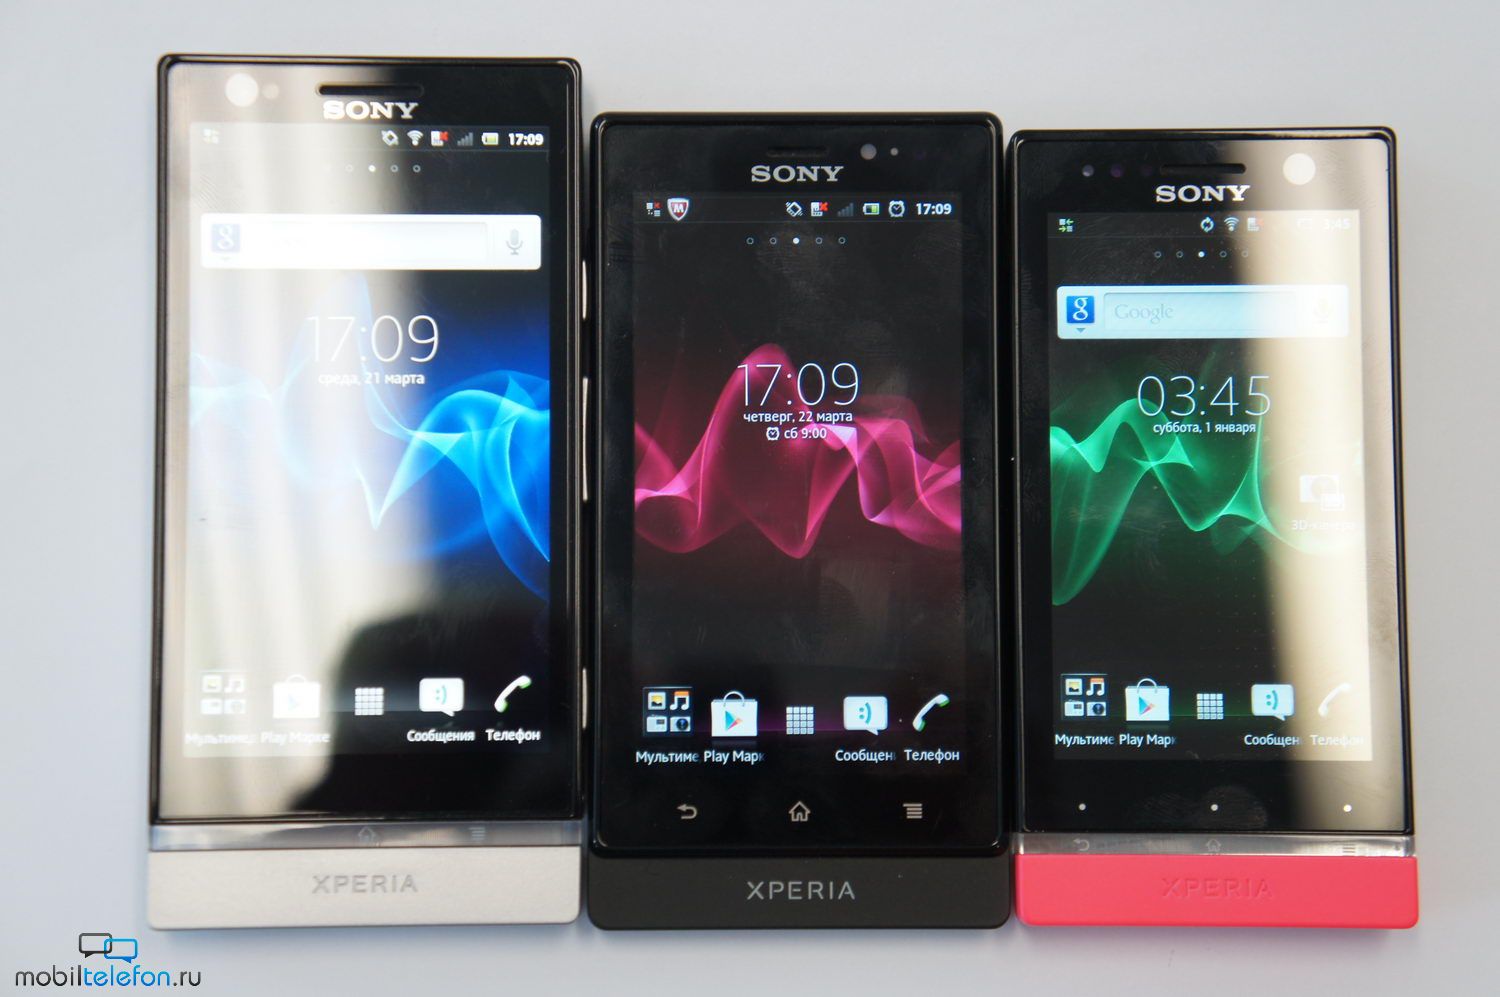 Xperia p. Sony Xperia u. Сони Xperia p. Телефон Sony Xperia p. Китайский сони иксперия.